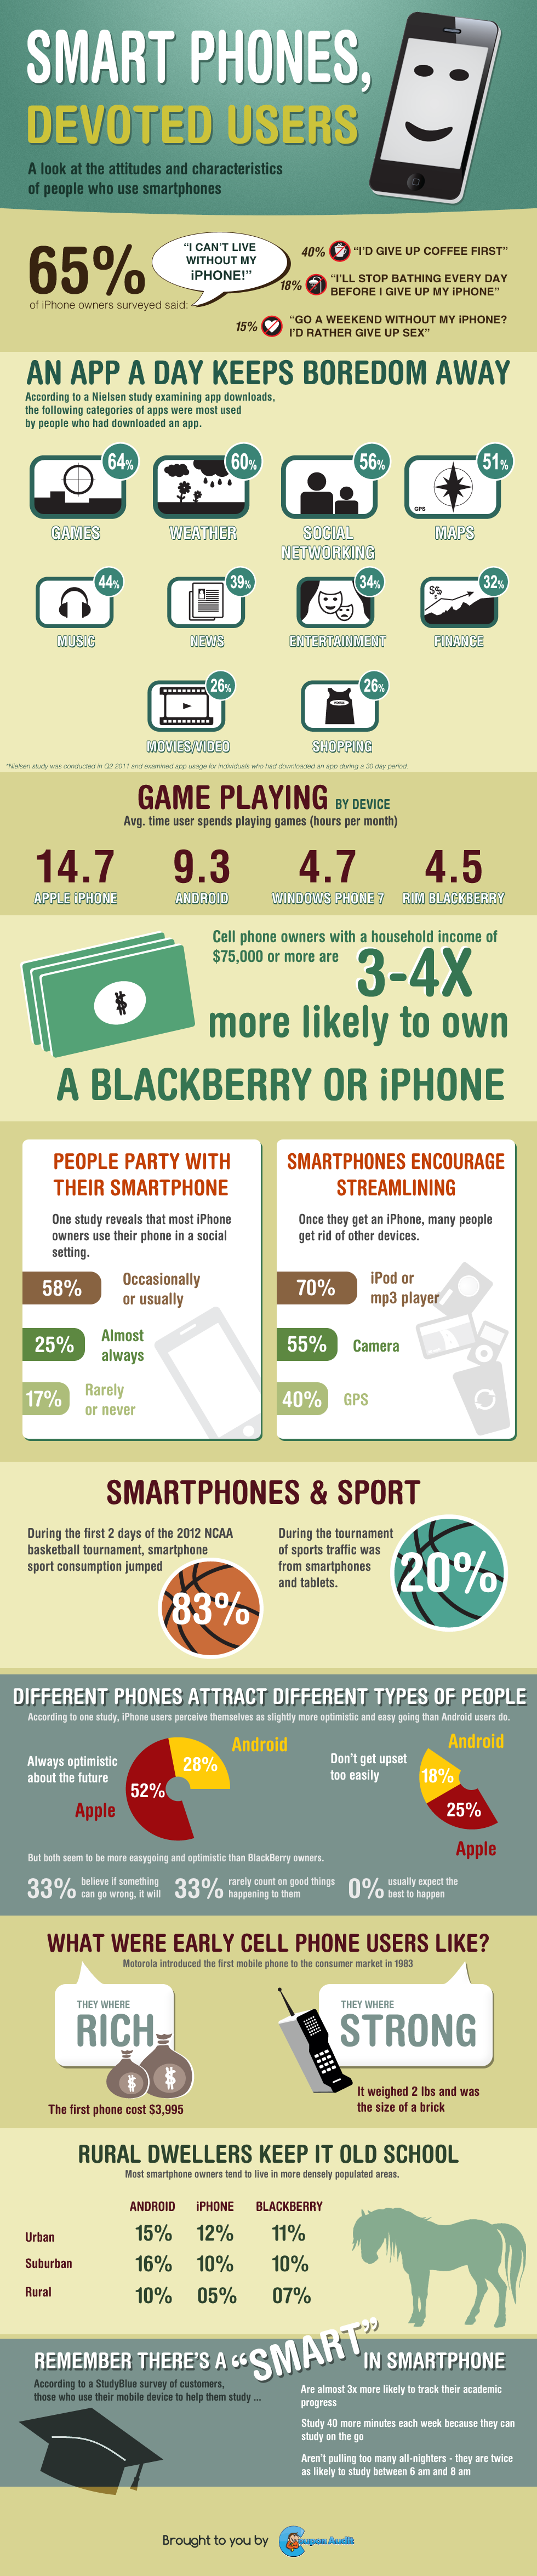 Smart Phone, Devoted Users!